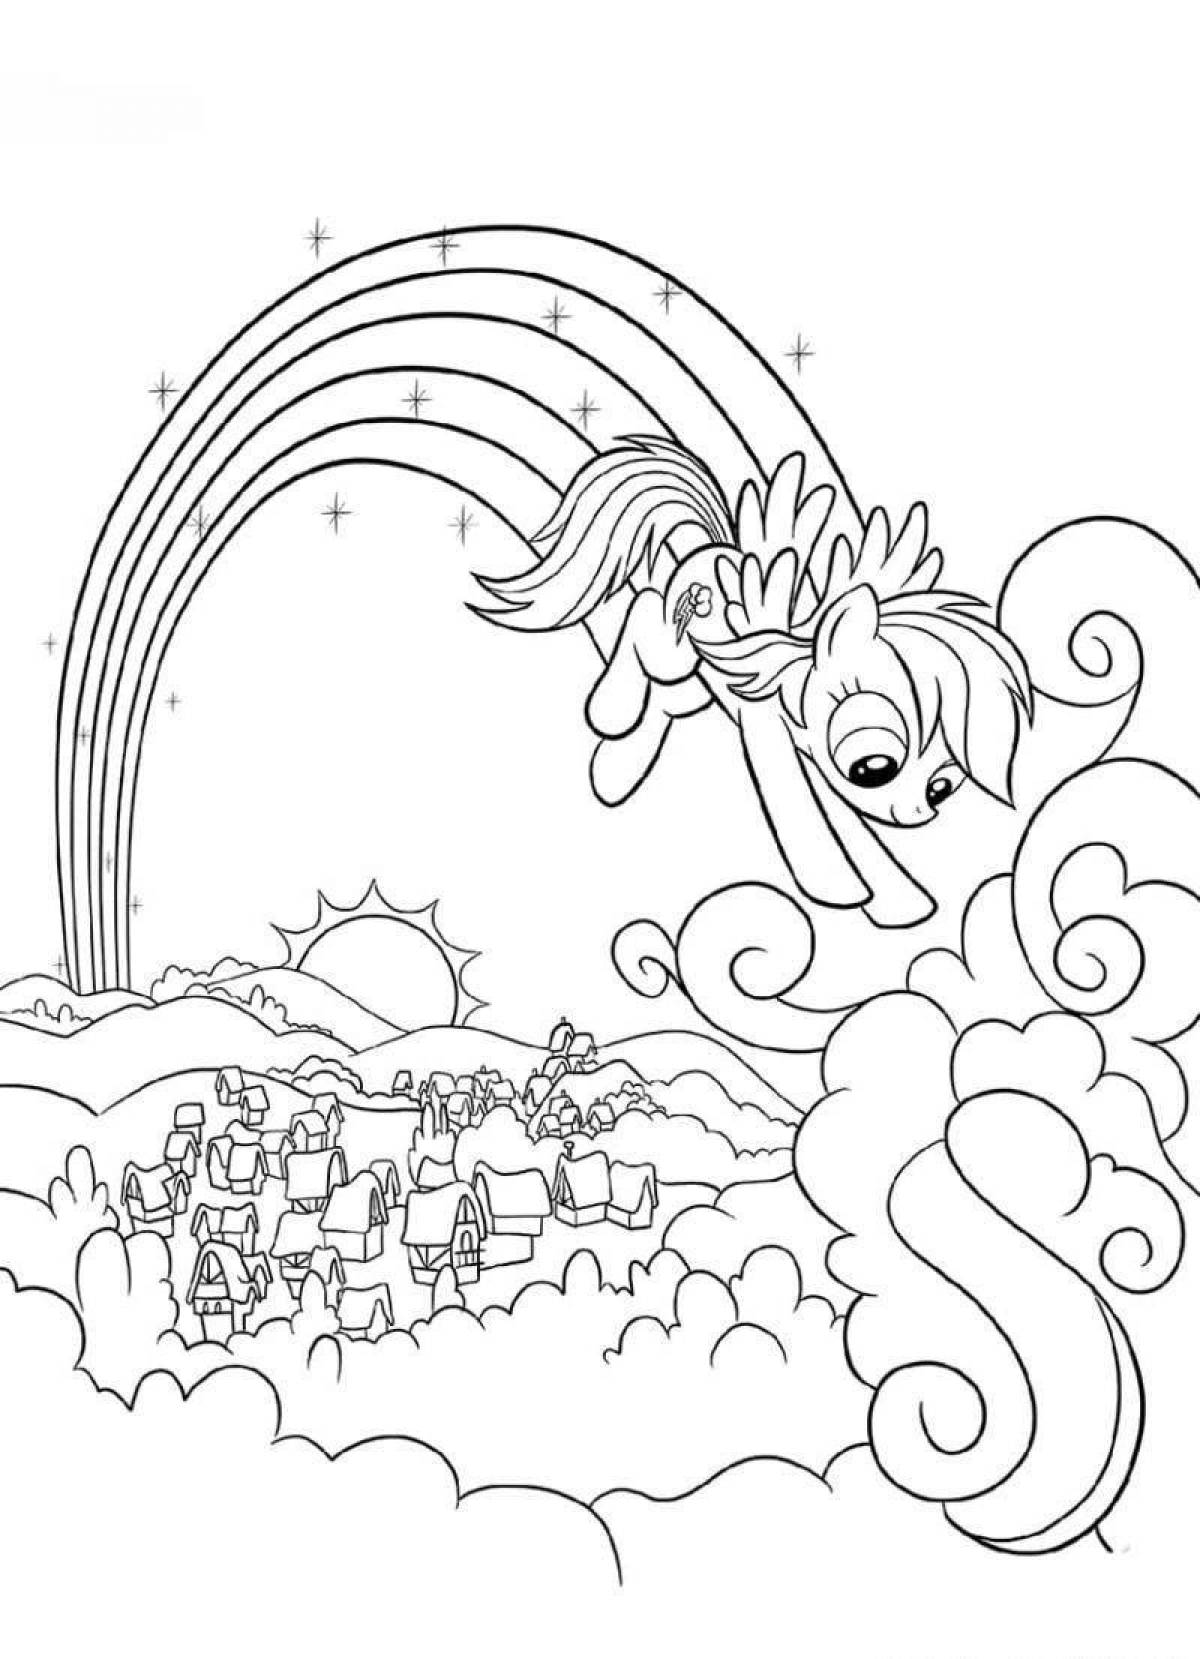 Fine rainbow pony coloring page